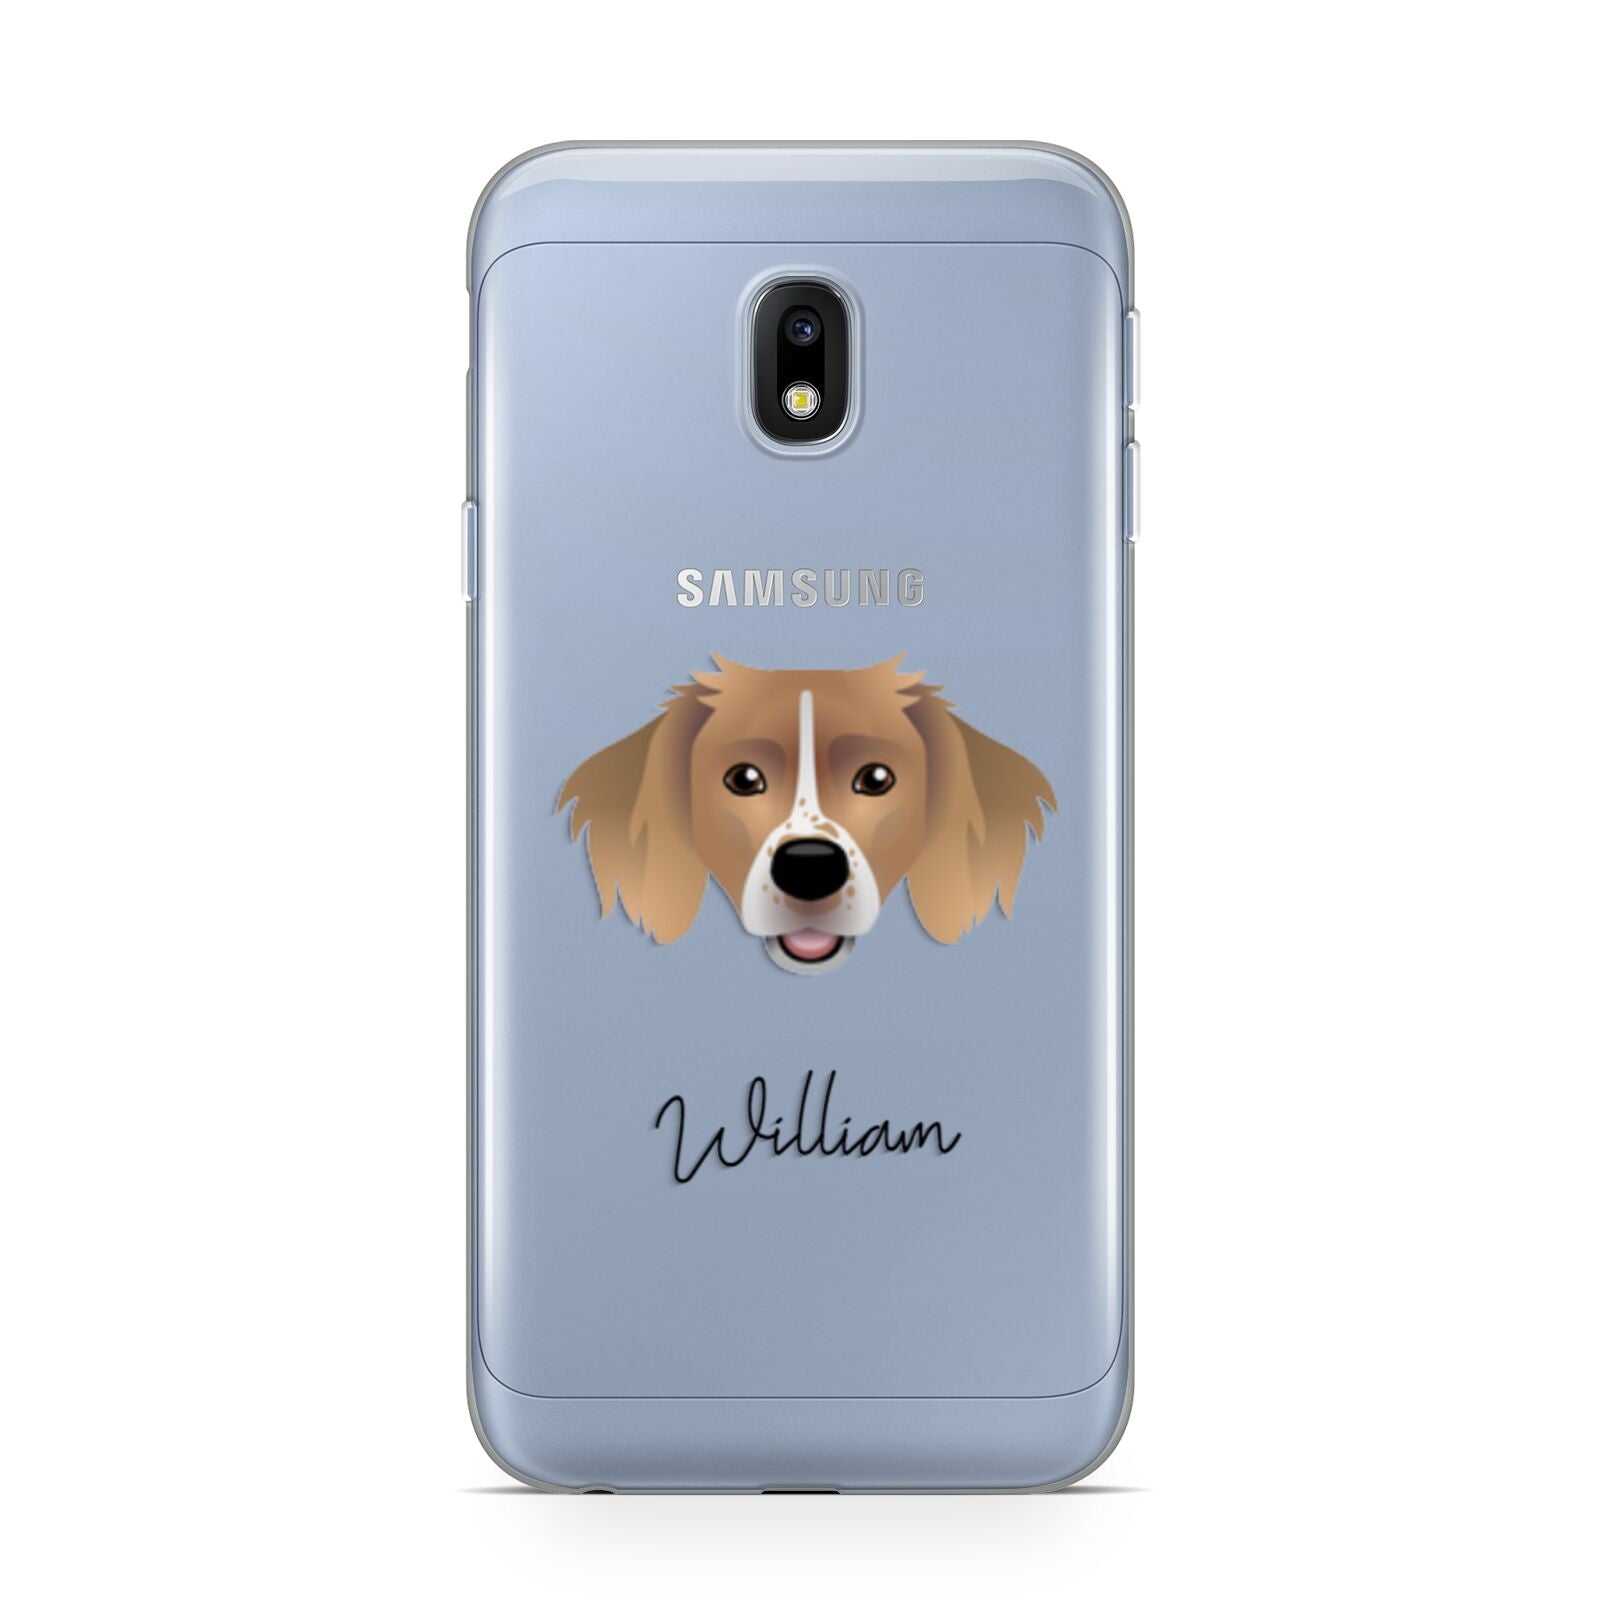 Sprollie Personalised Samsung Galaxy J3 2017 Case